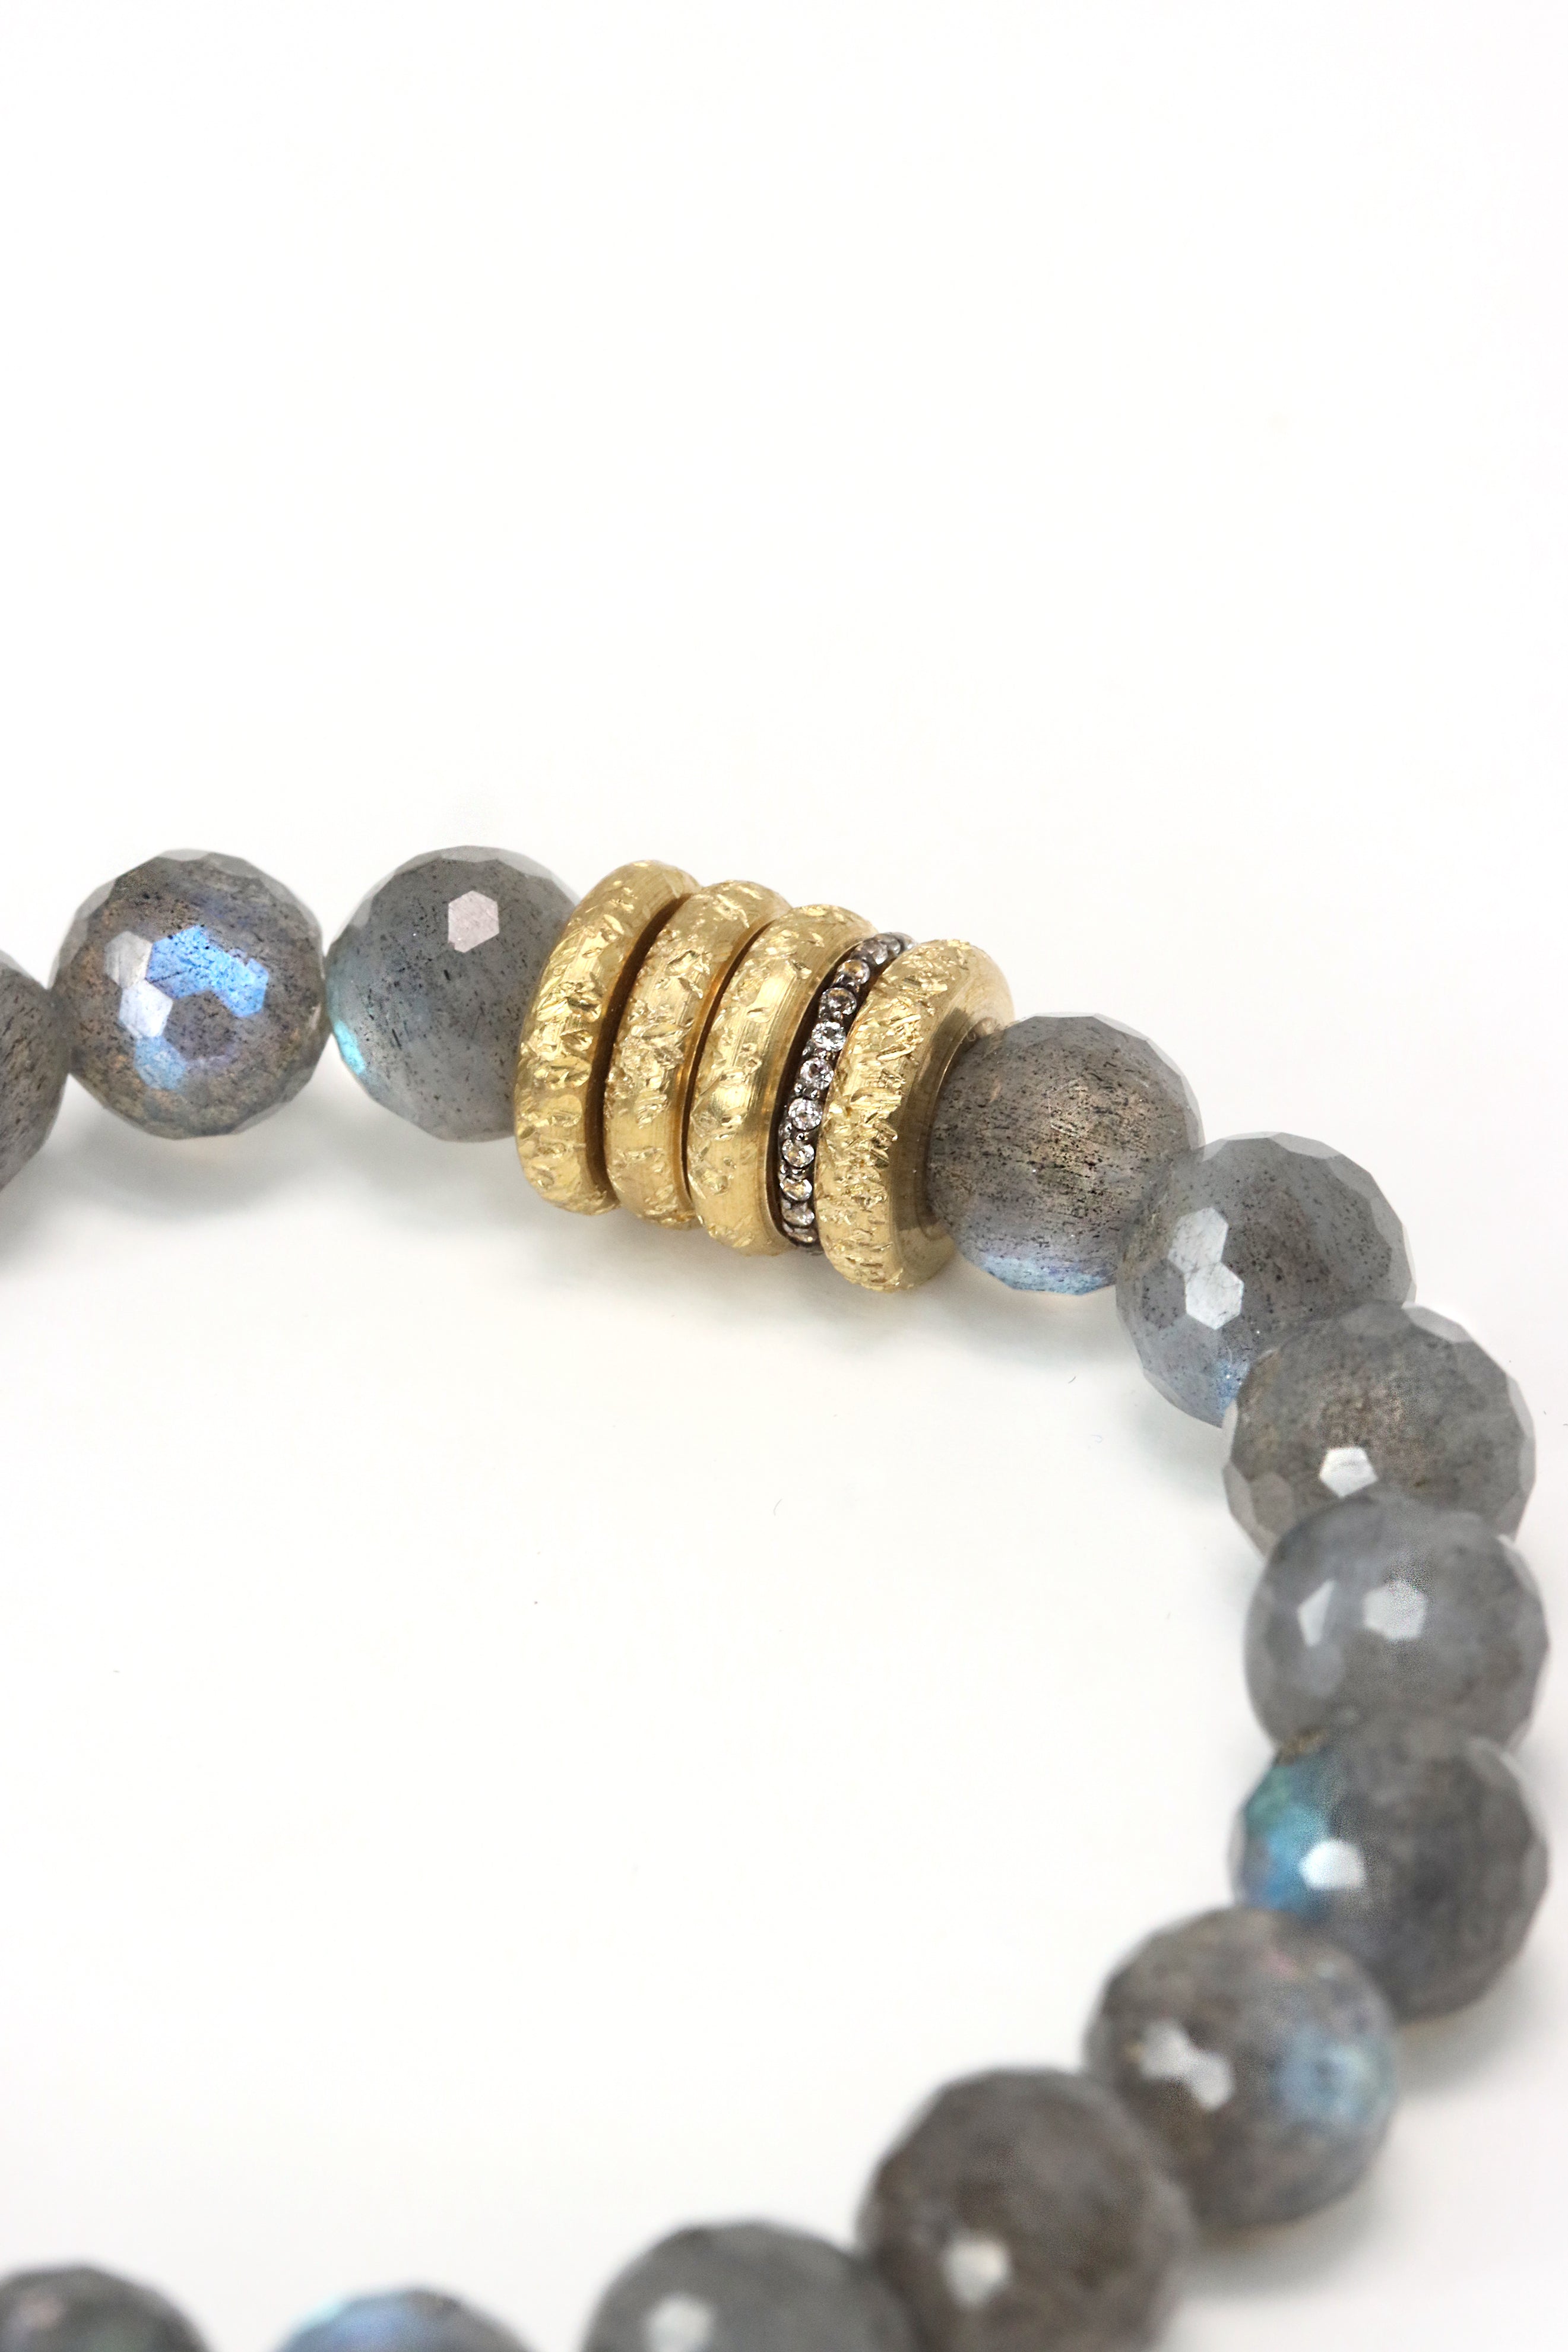 Labradorite Bracelet for Mental & Emotional Healing 8mm Beads